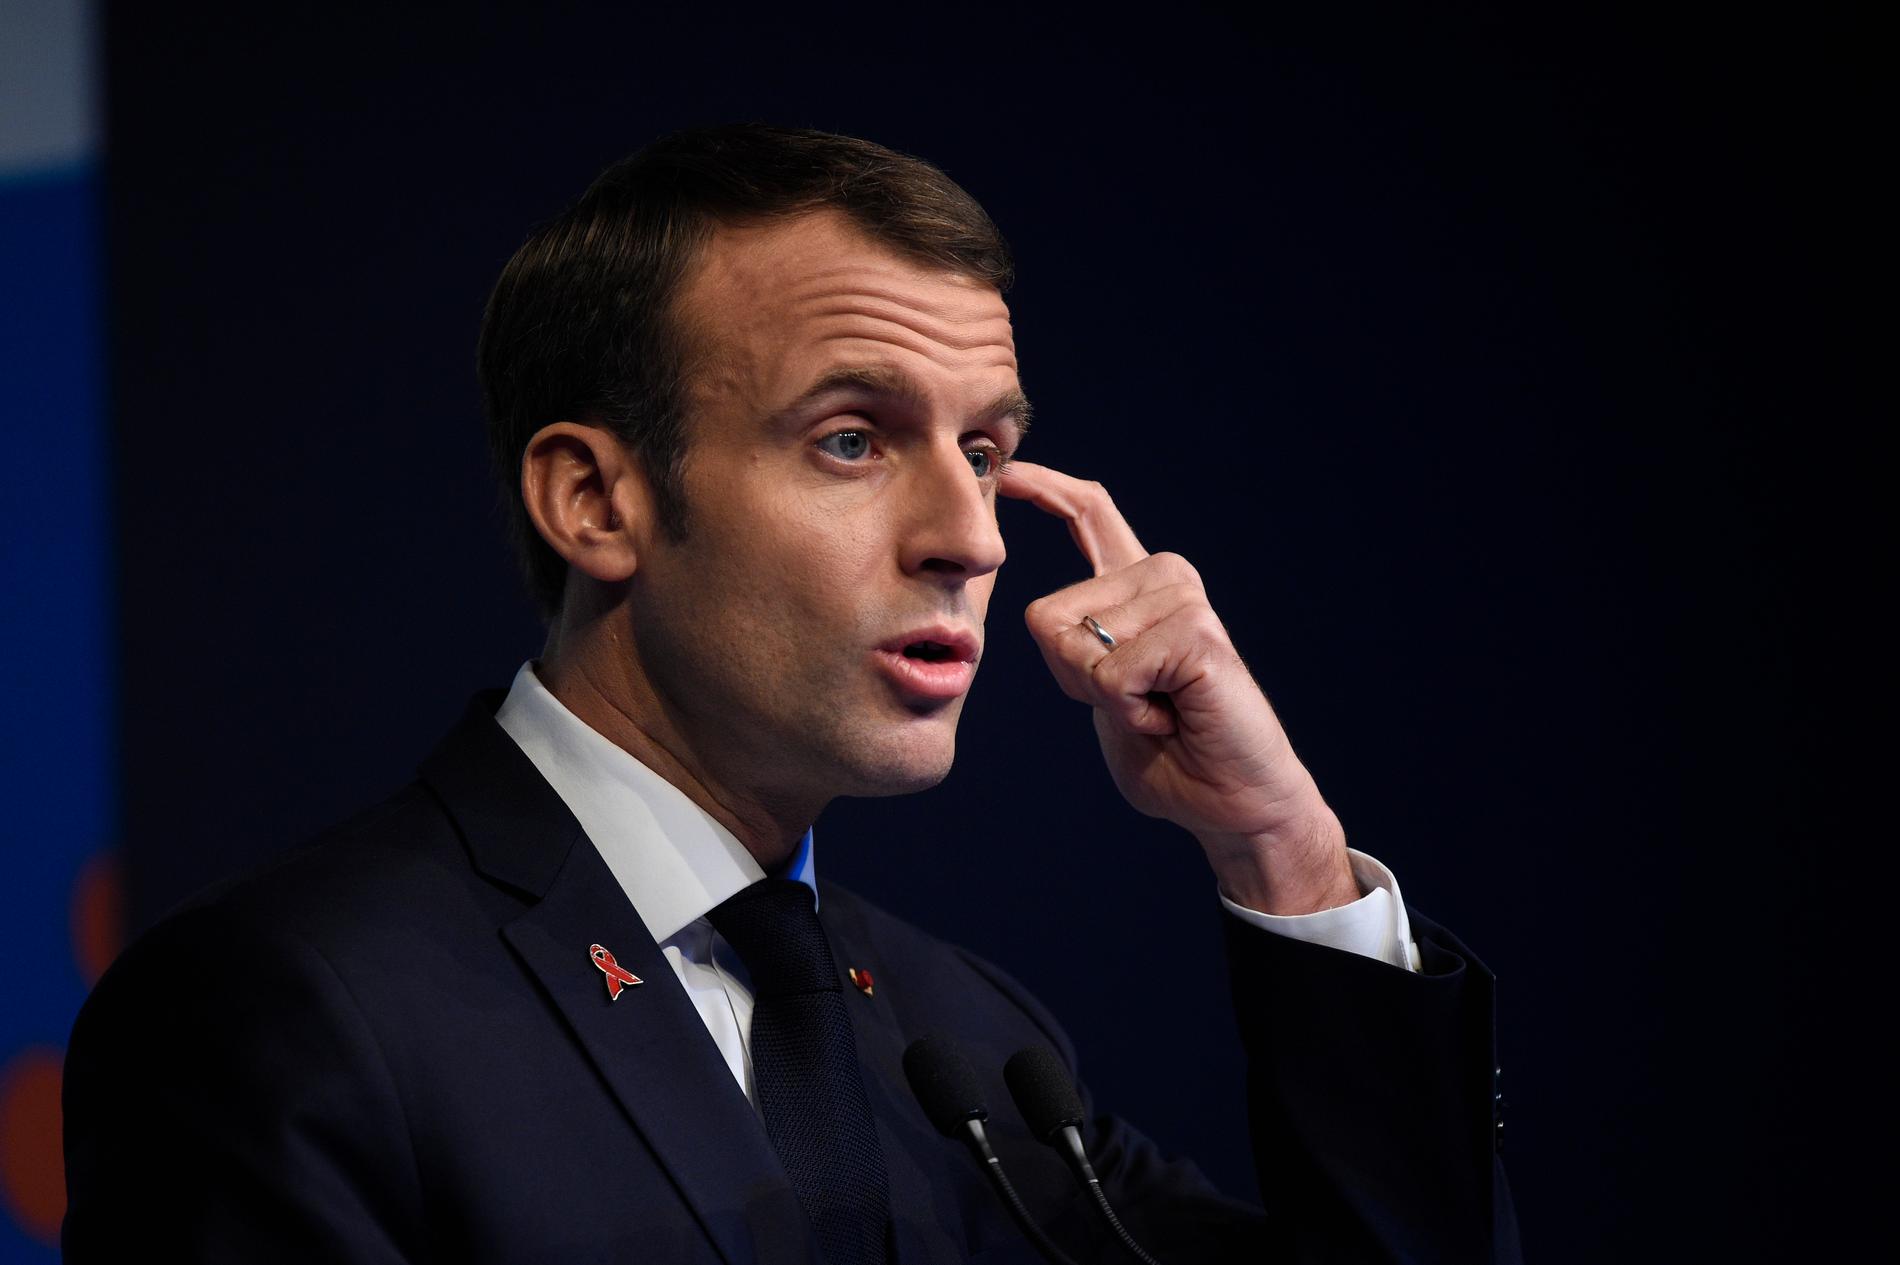 Emmanuel Macron, en uppblåst ledare med Napoleonkomplex?